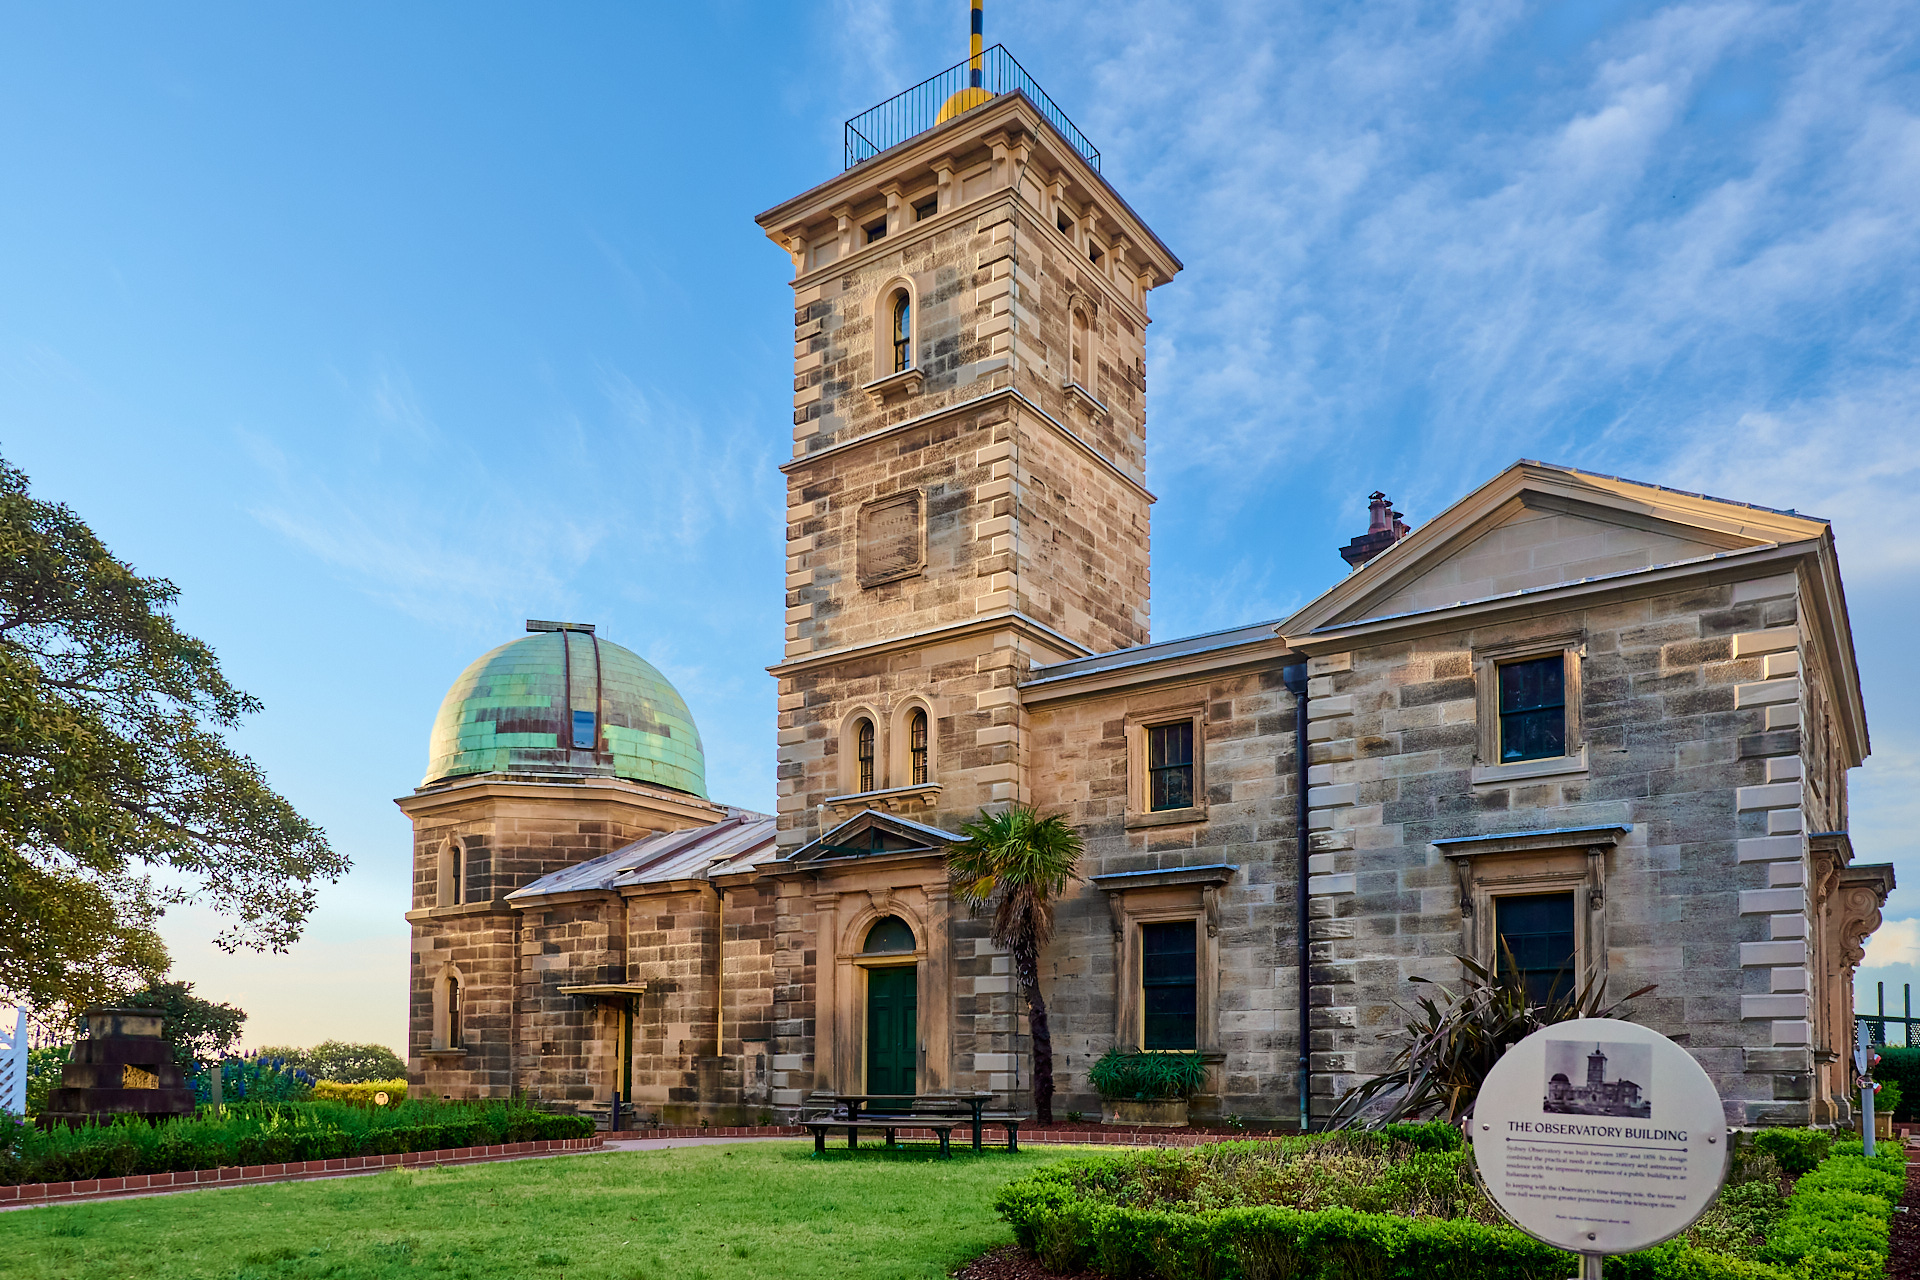 Sydney Observatory Building Architecture in Italianate style. By orlandosydney.com